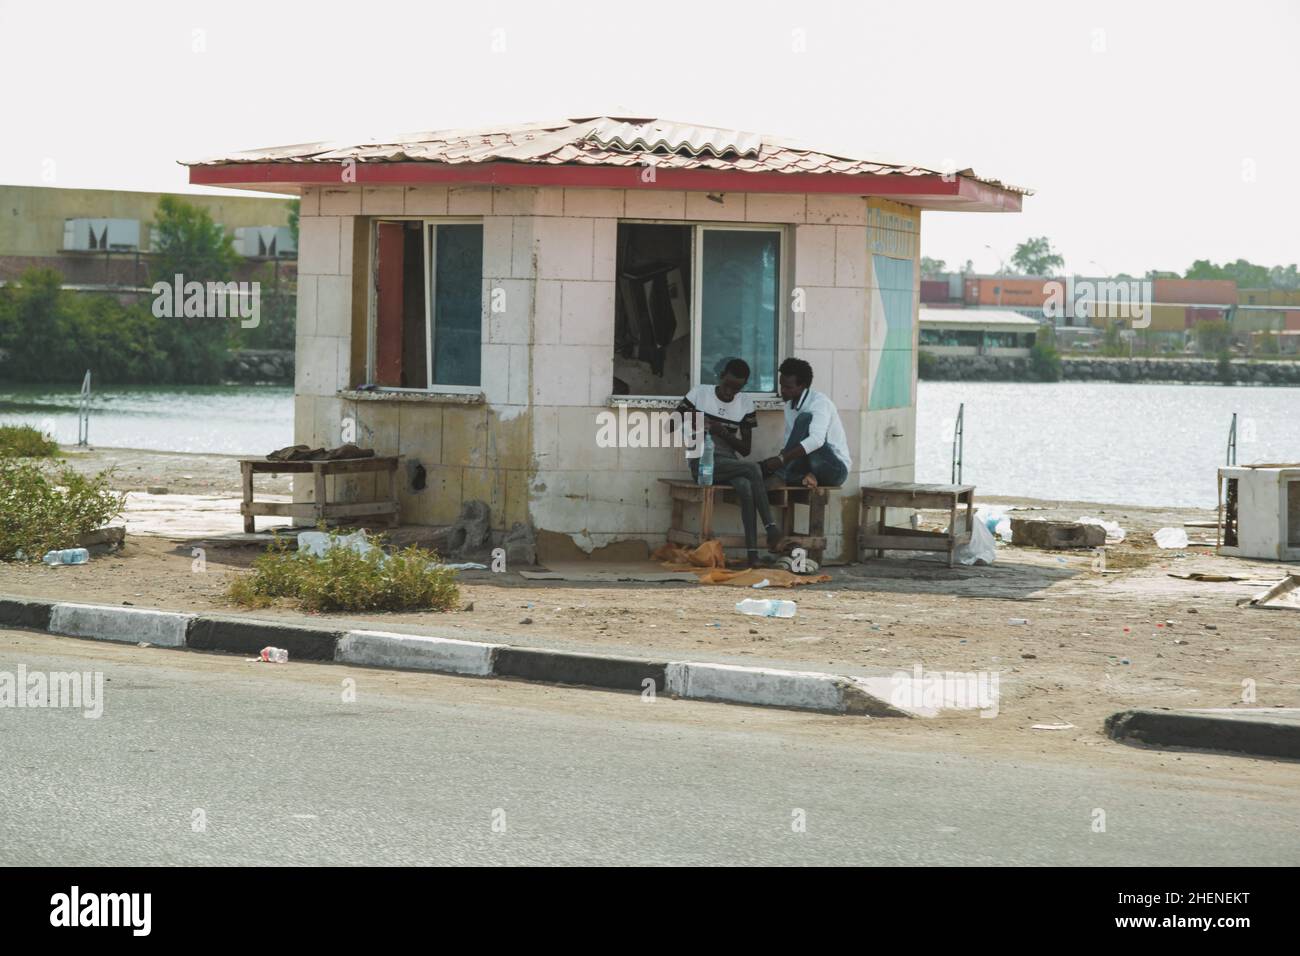 Djibouti, Djibouti - May 21, 2021: Two Djiboutians men sitting under an old shack . Editorial shot in Djibouti. Stock Photo